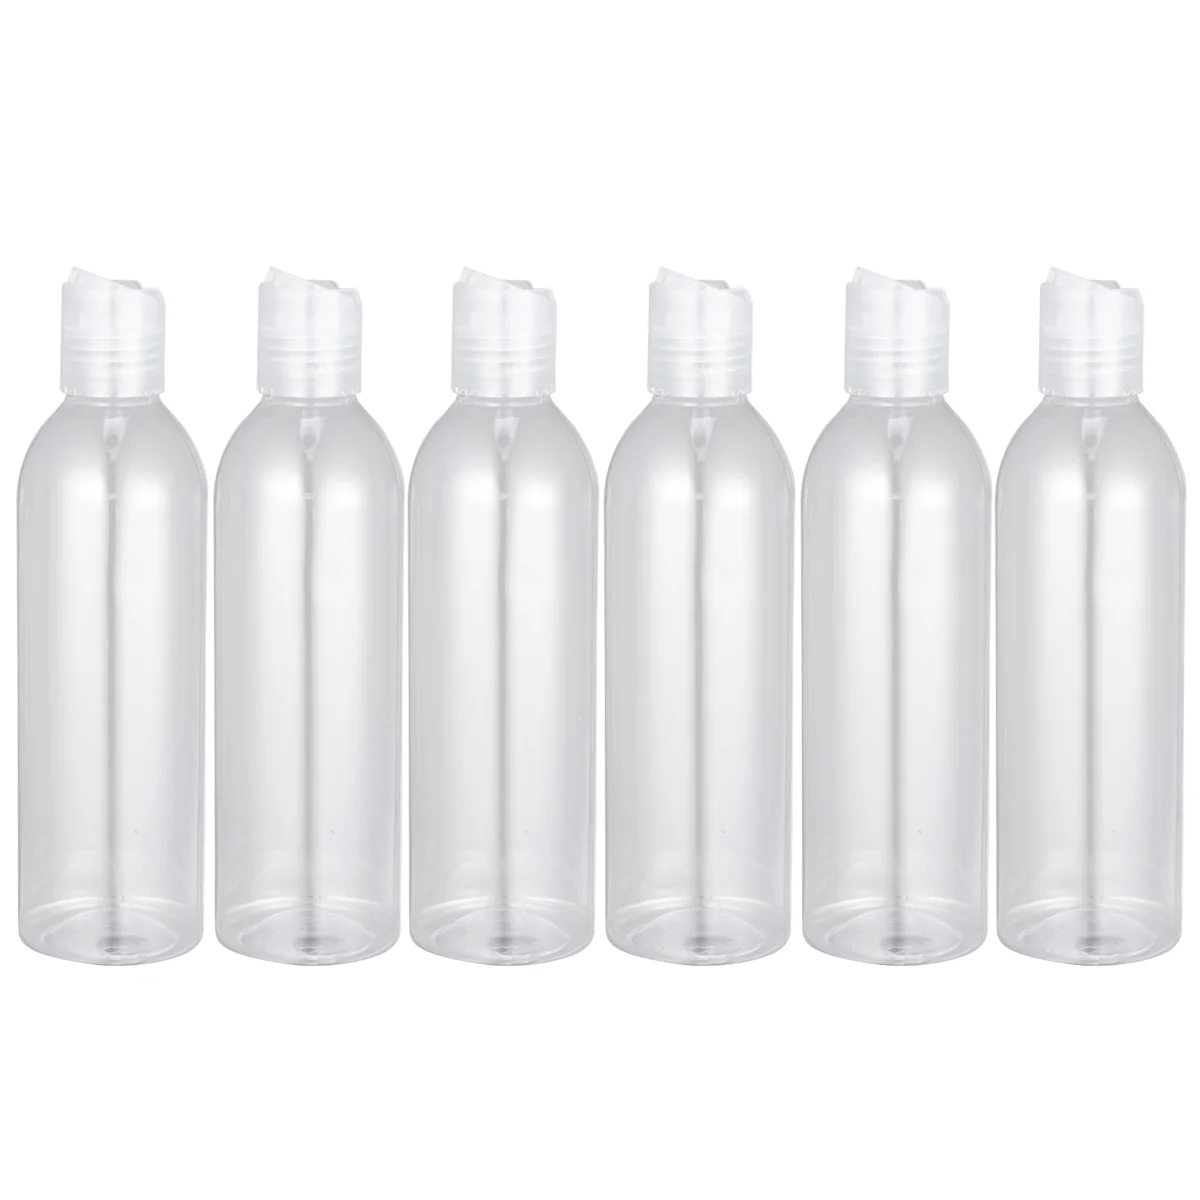 

6pcs 250ml Cap Bottles, Empty Travel Containers Bottles Press Bottle Dispenser for Lotion Shower Toiletries